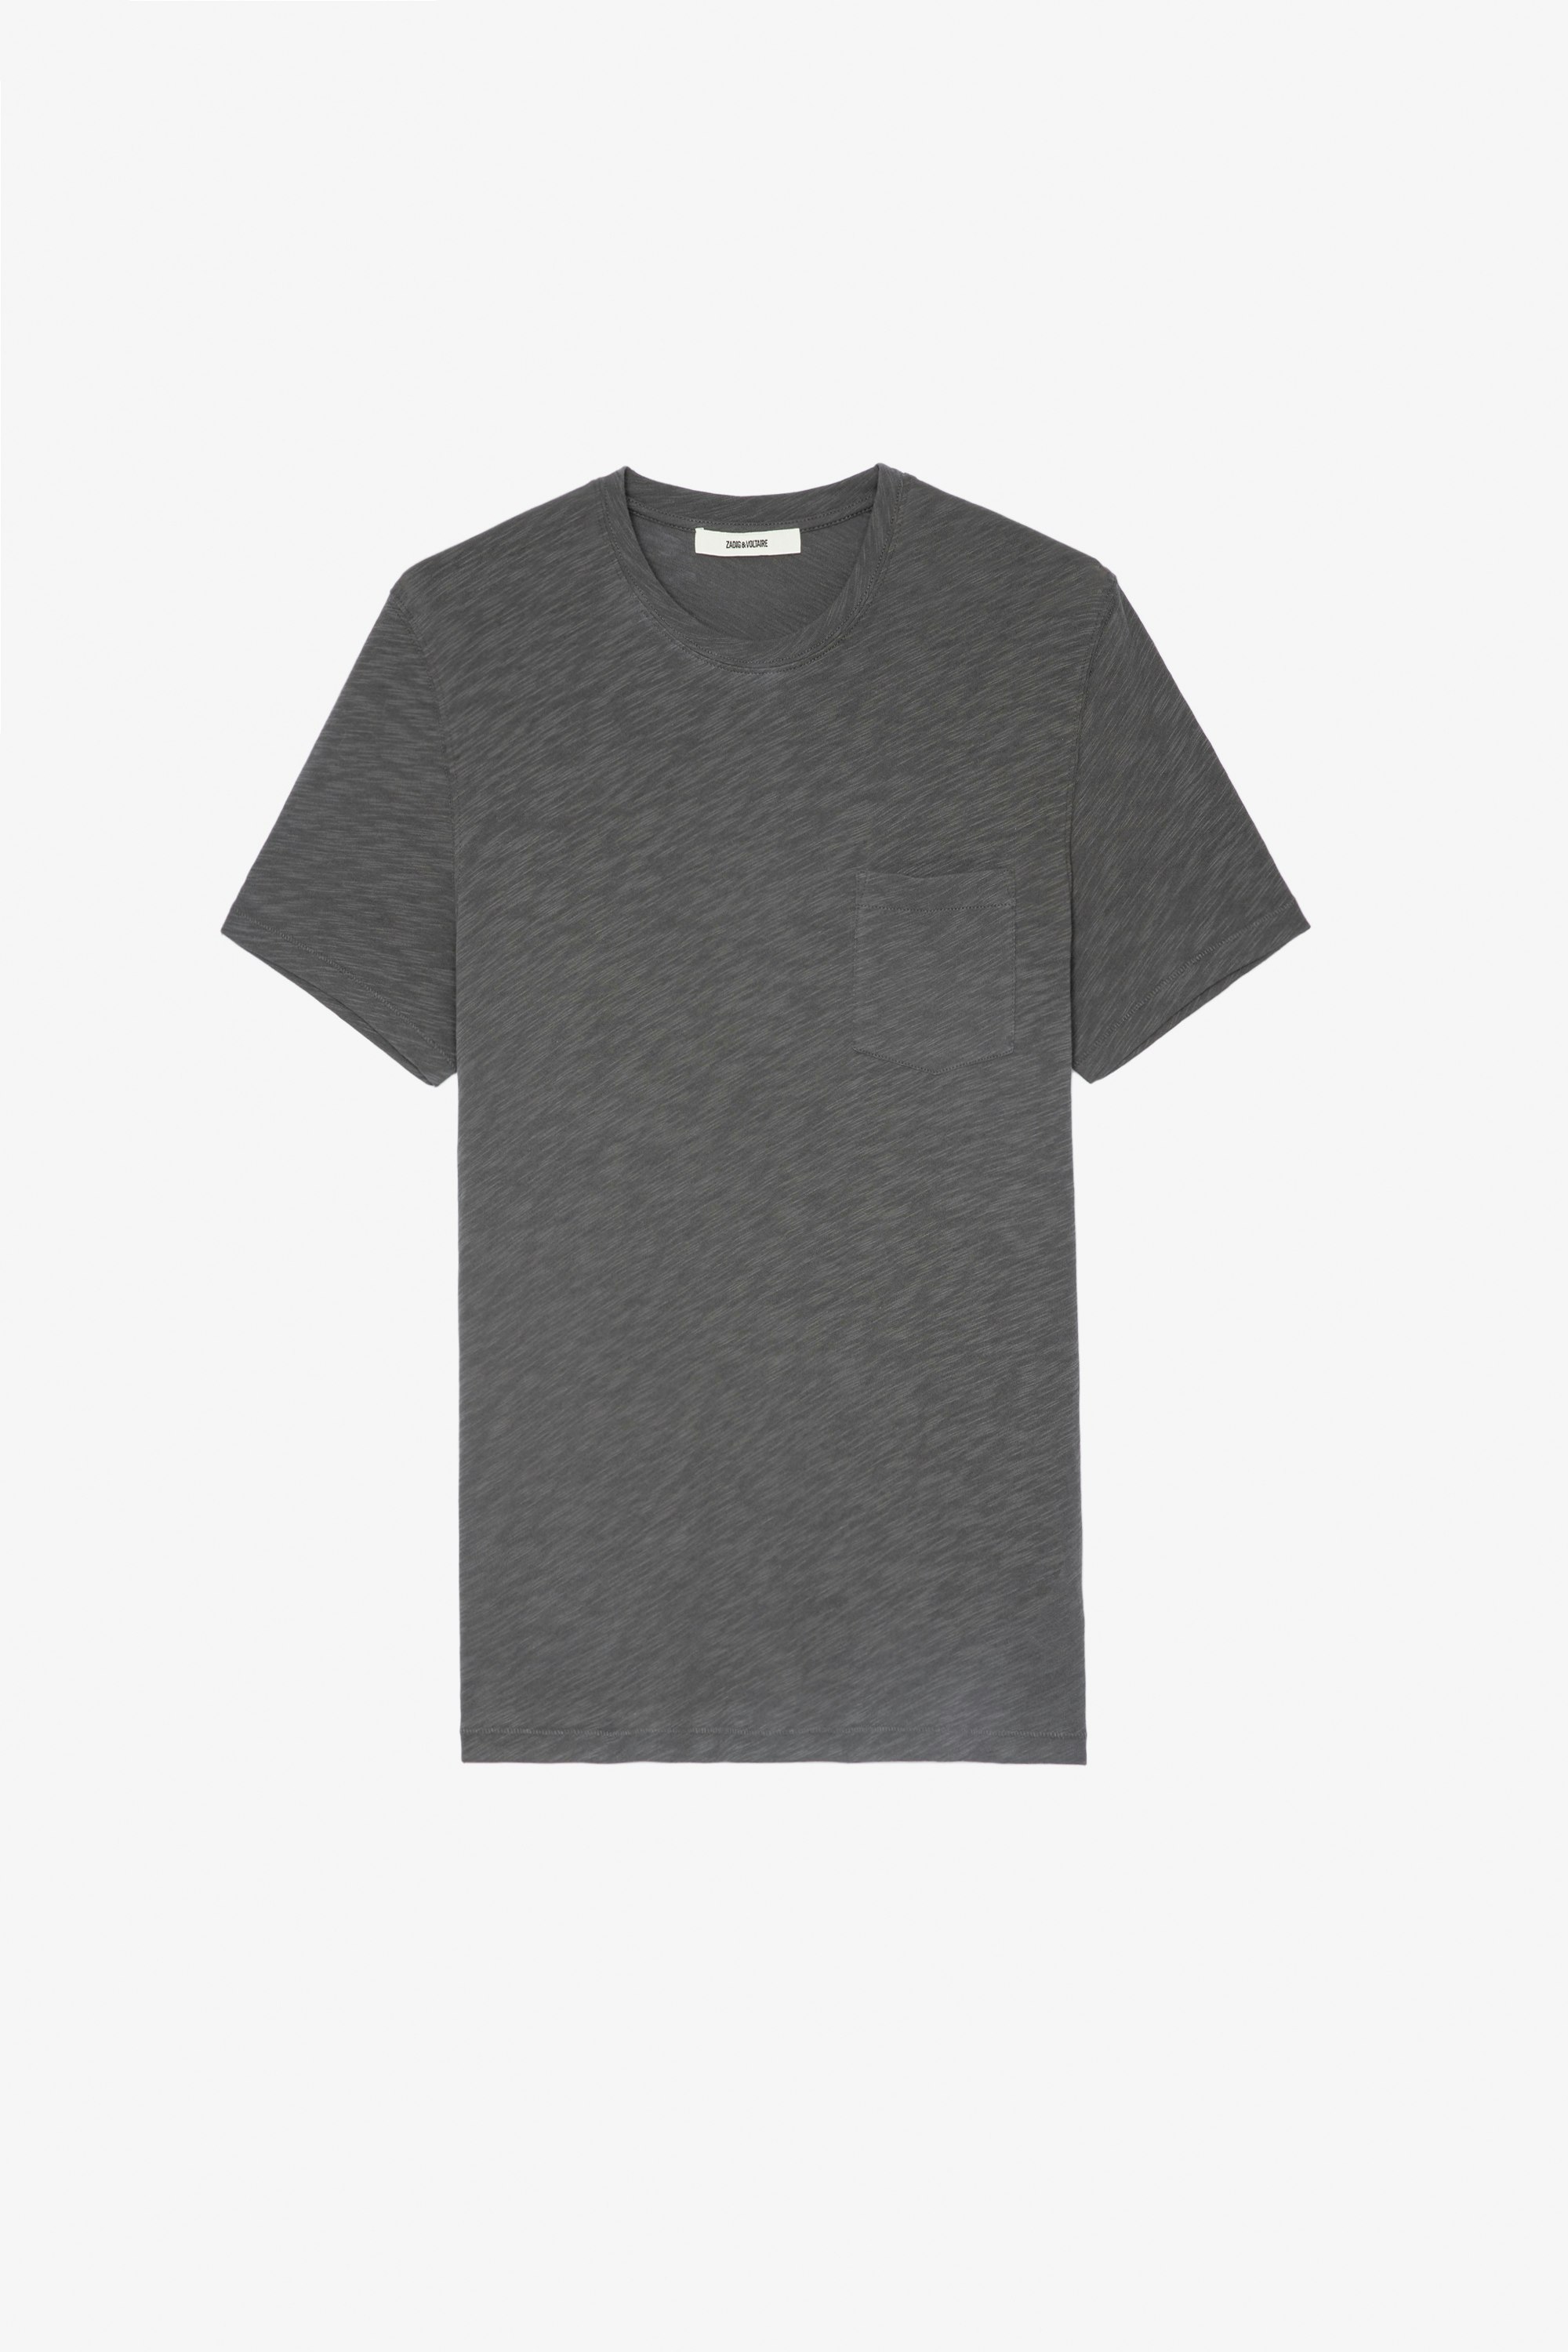 Stockholm Ｔシャツ ラウンドネックと半袖で、背中にスカルのプリントを施したグレーのフレイムコットンTシャツです 